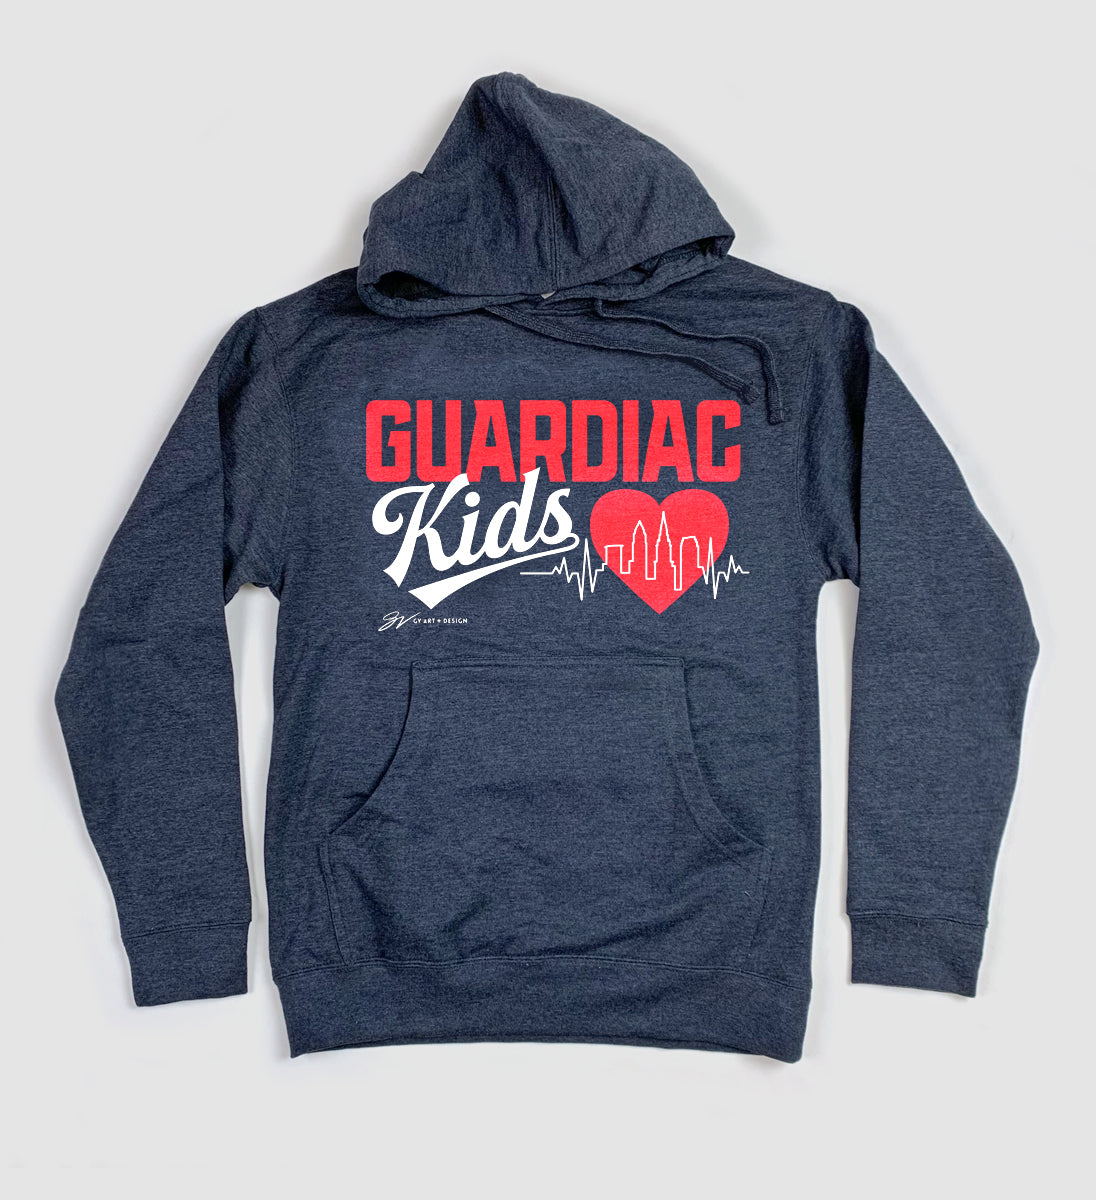 Cleveland "Guardiac Kids" Adult Hooded Sweatshirt